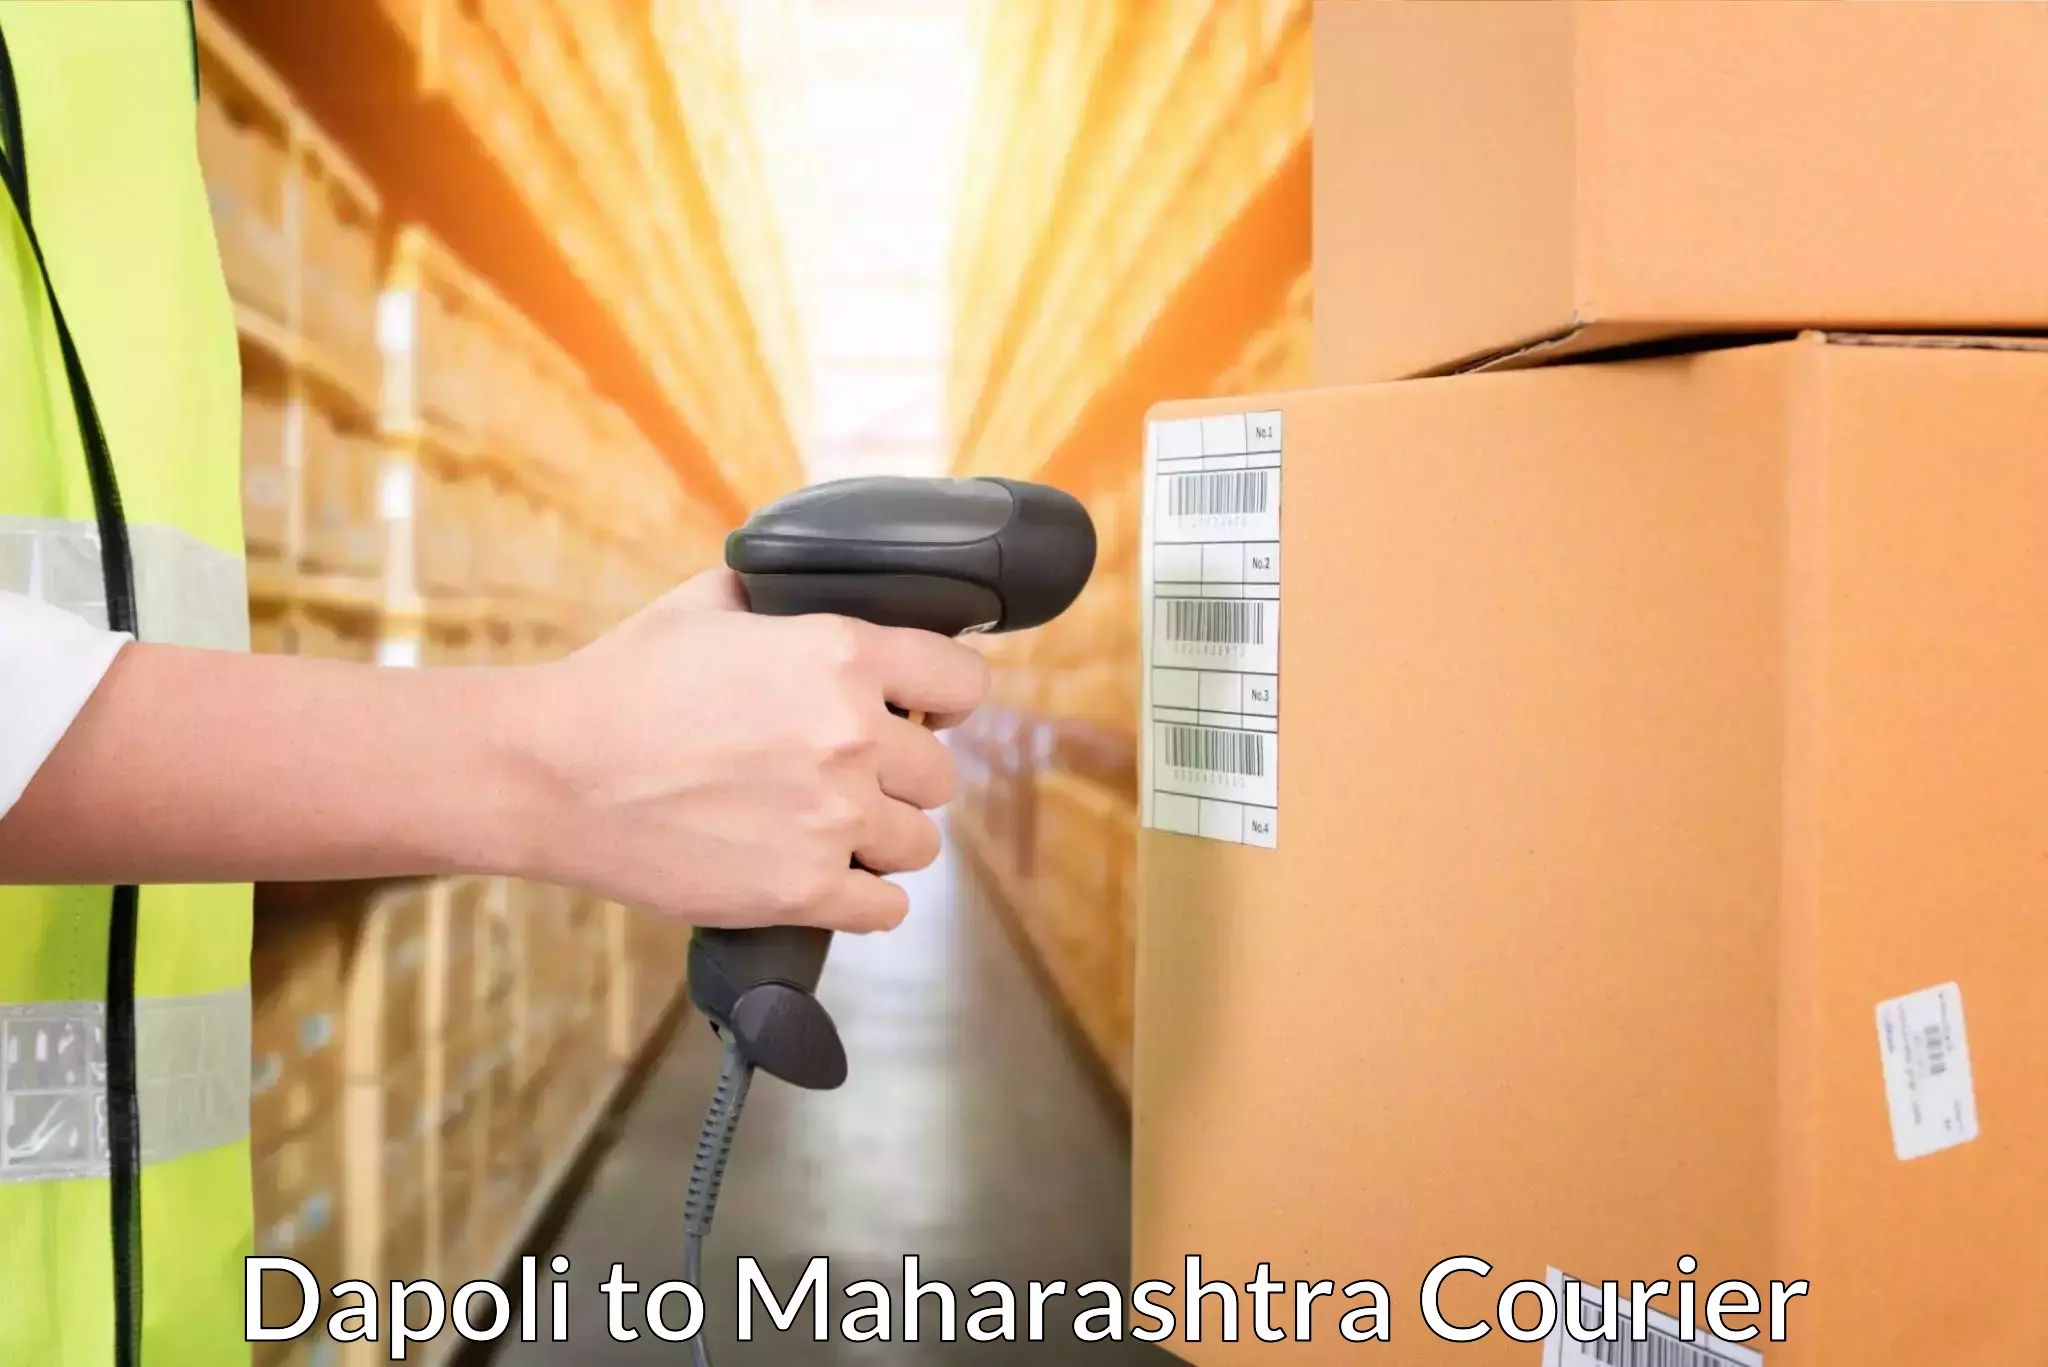 Advanced delivery network Dapoli to Maharashtra